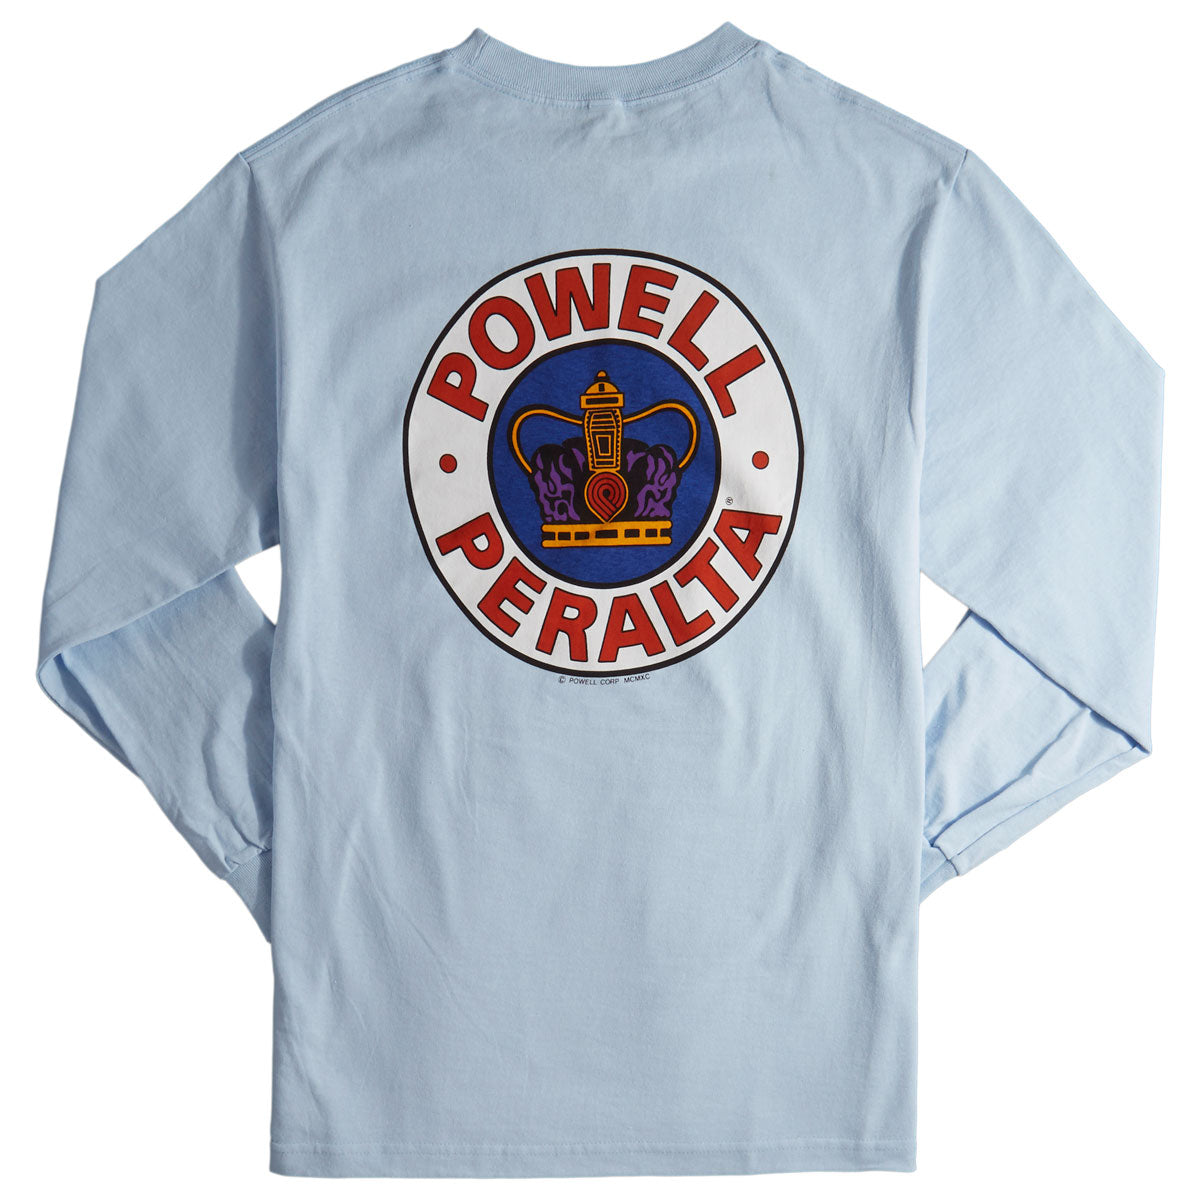 Powell-Peralta Supreme Long Sleeve T-Shirt - Powder Blue image 2